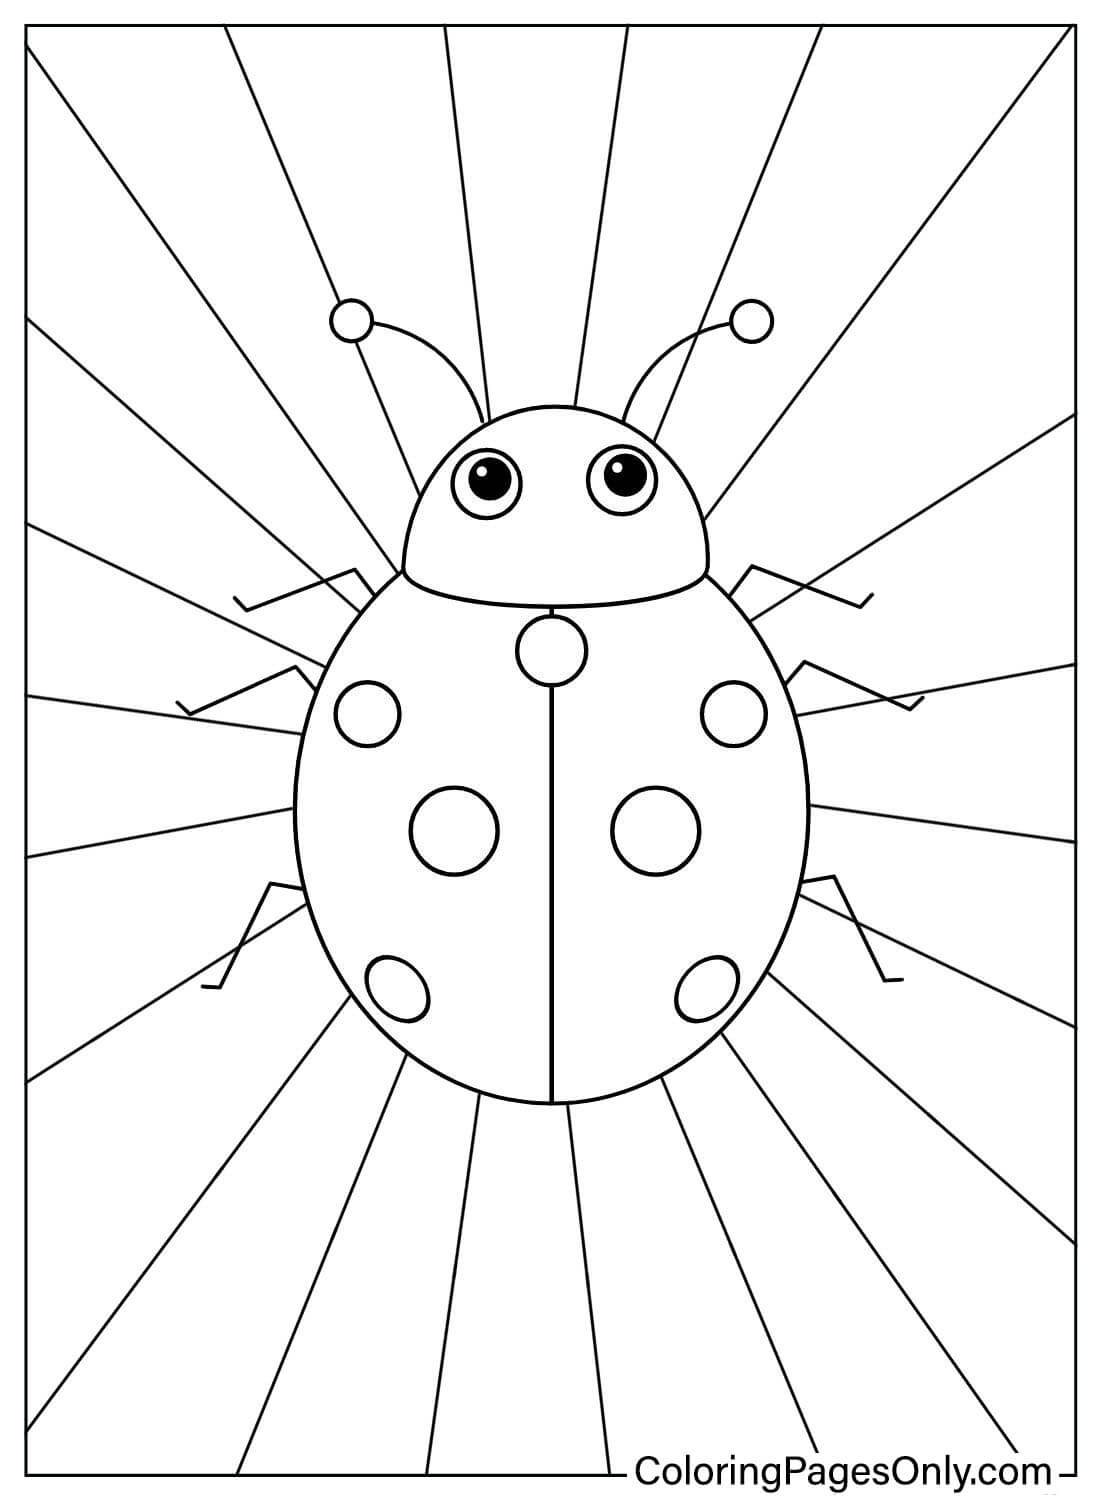 Easy Ladybug Coloring Page from Ladybug